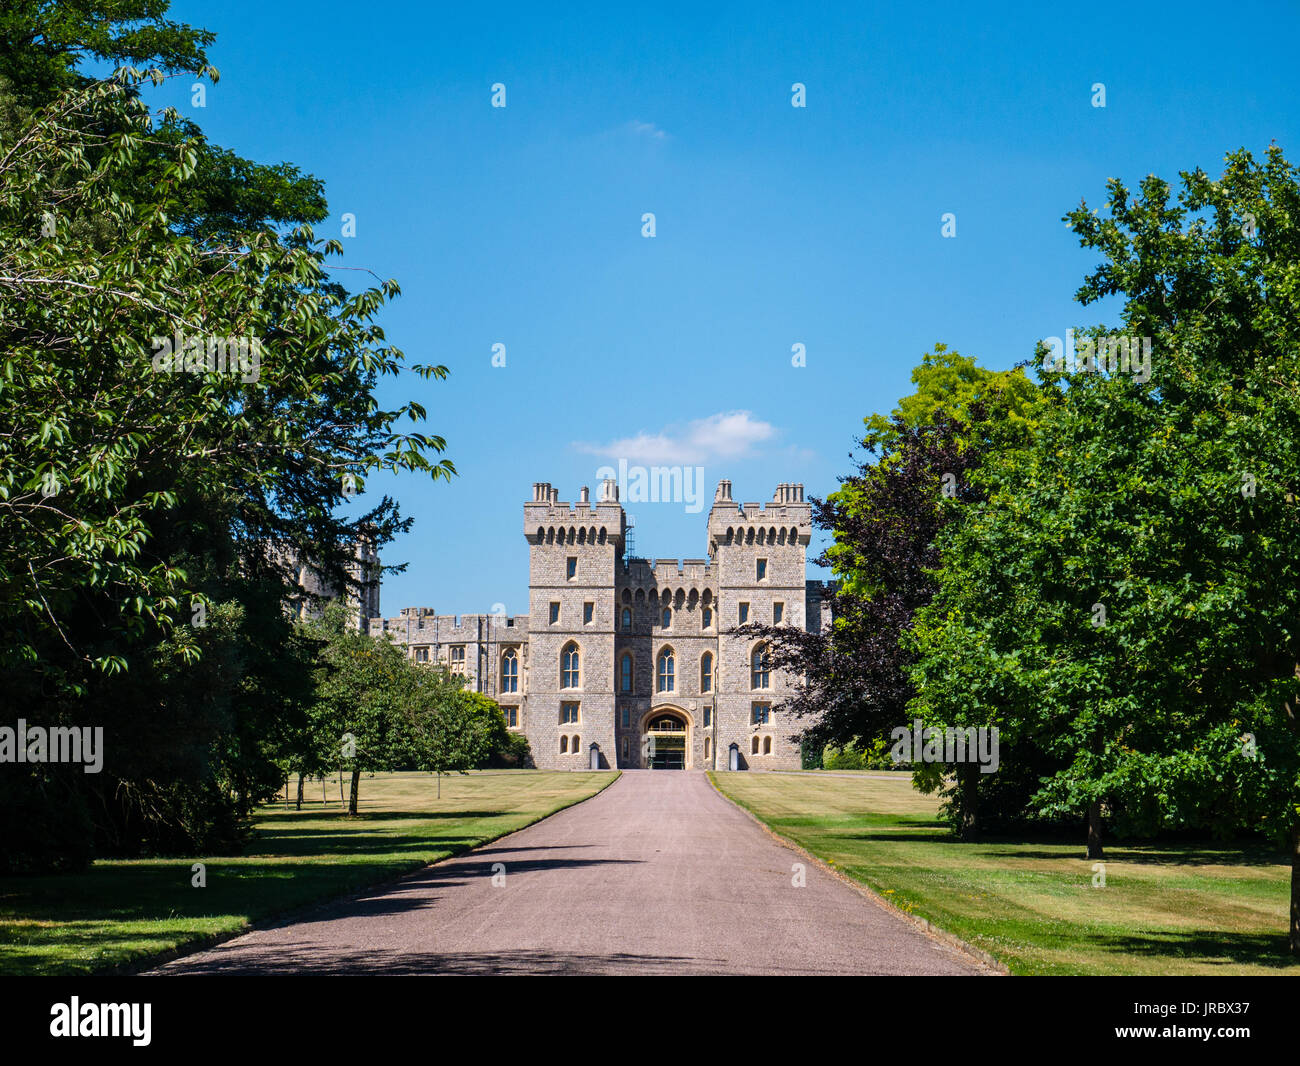 Windsor Castle Blick von dem langen Spaziergang, Windsor, Berkshire, England, UK, GB. Stockfoto